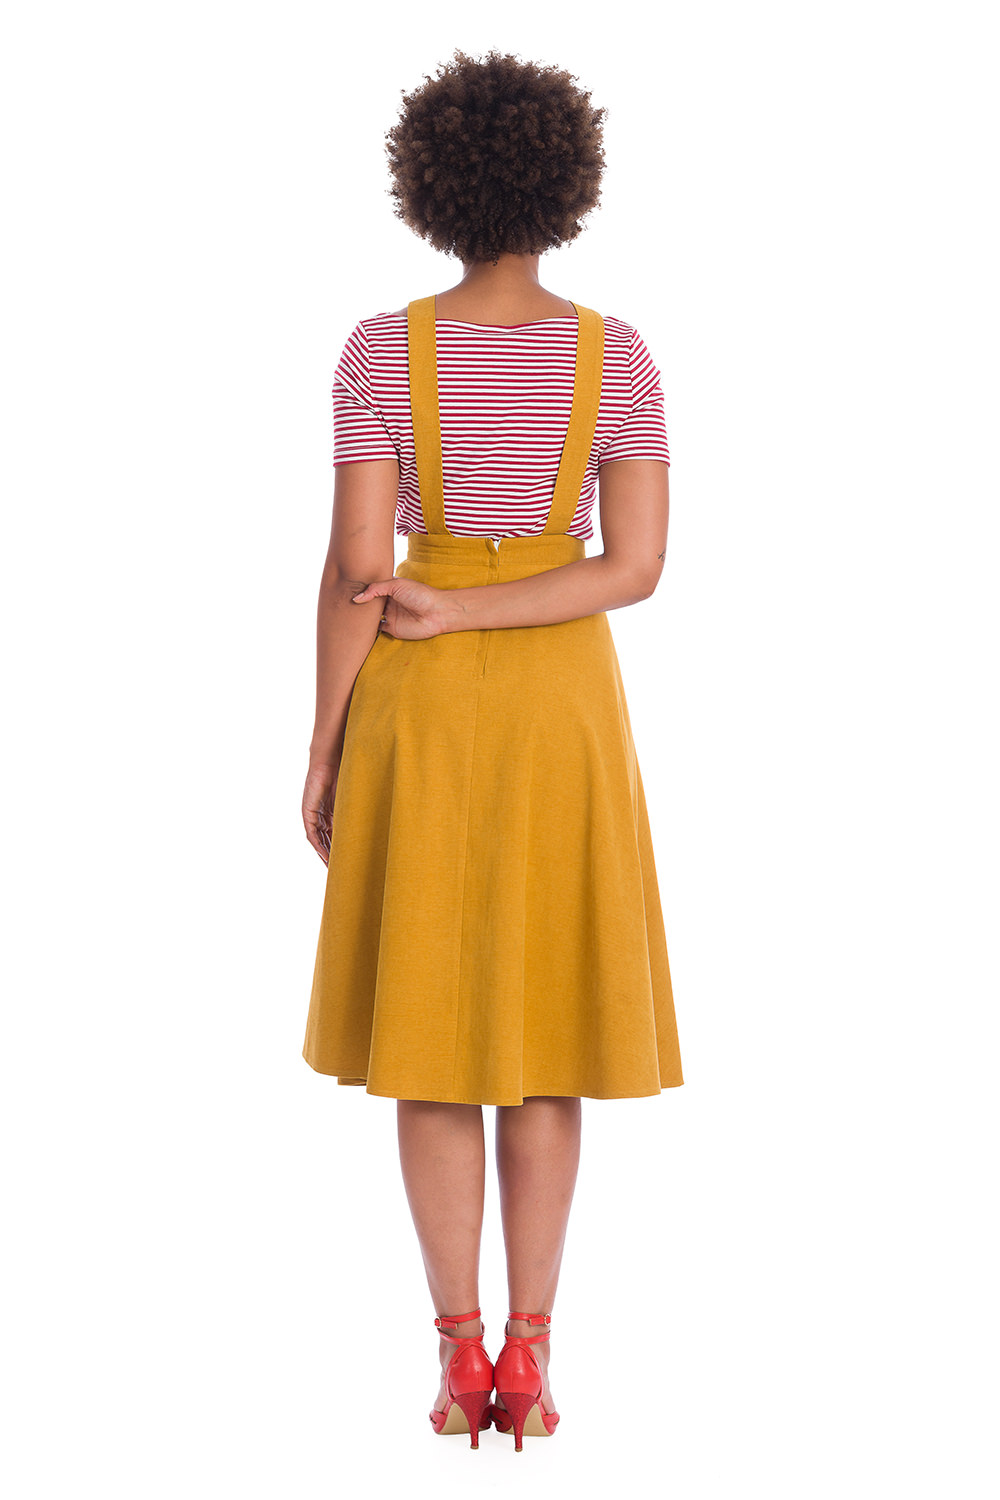 Banned Retro Book Smart Mustard Pinafore 50s Dress Skirt